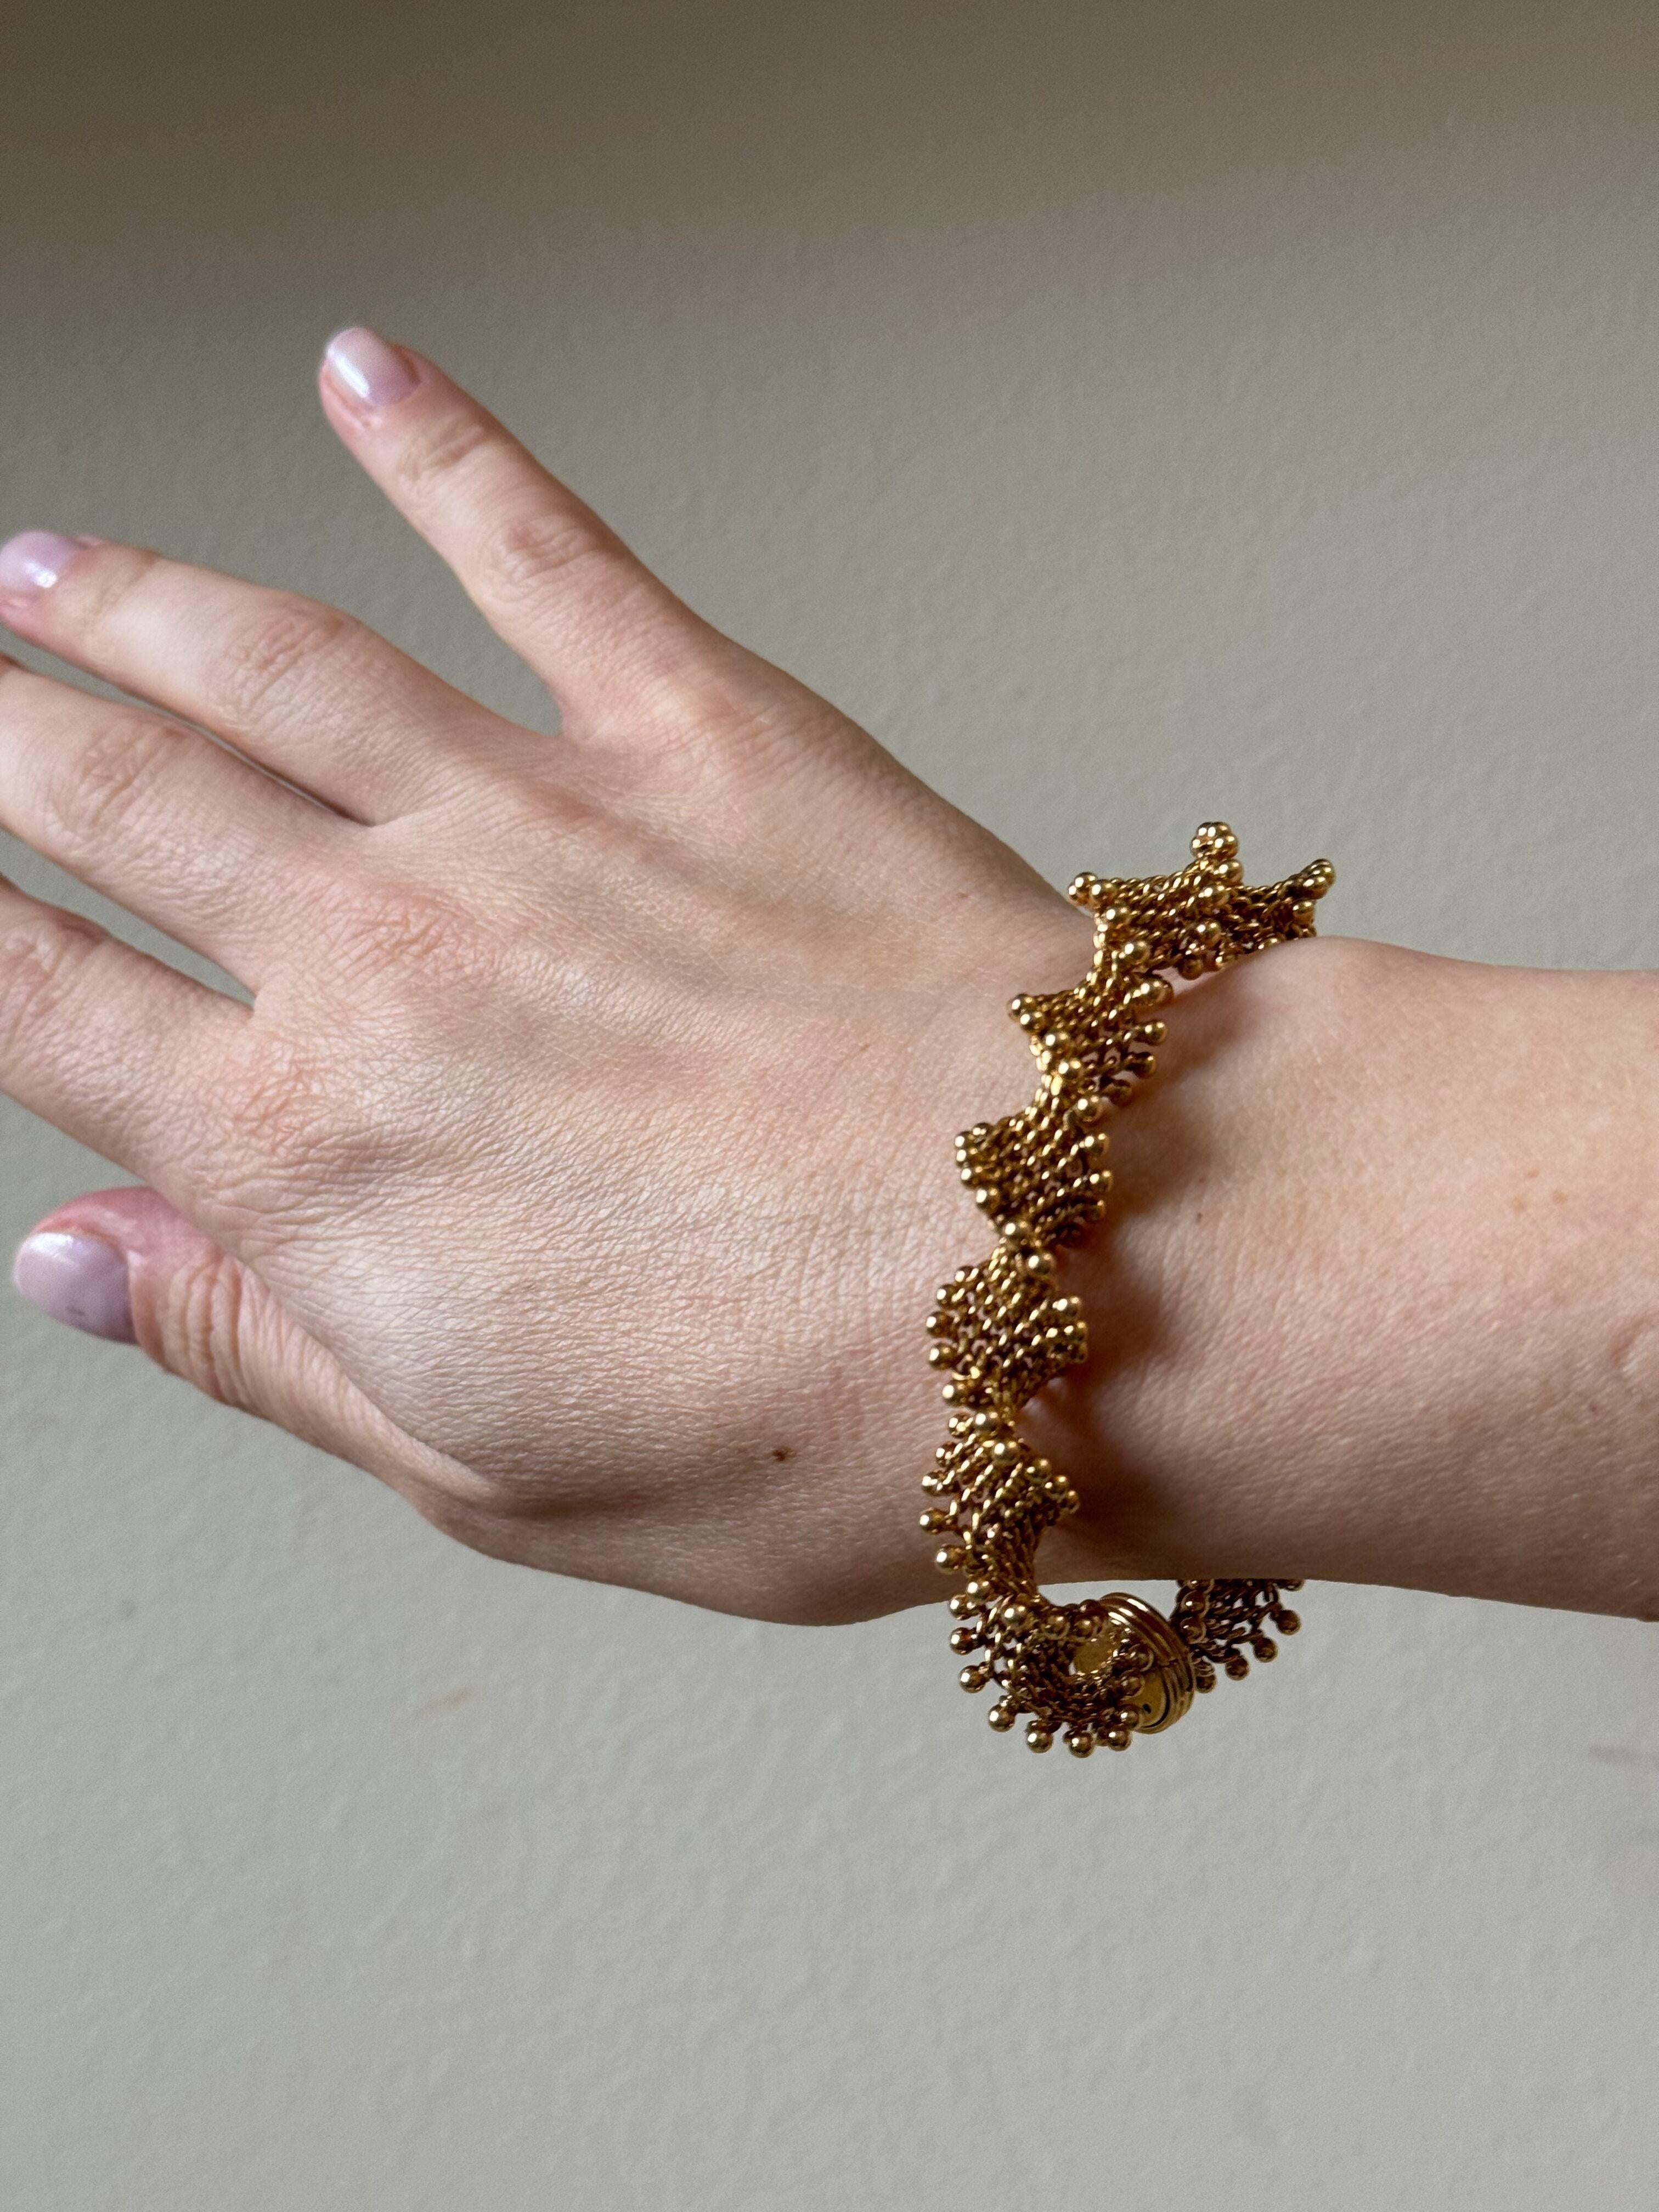 1960s vintage 18k gold bracelet by Van Cleef & Arpels, featuring twisted beaded links. The bracelet is 7.75